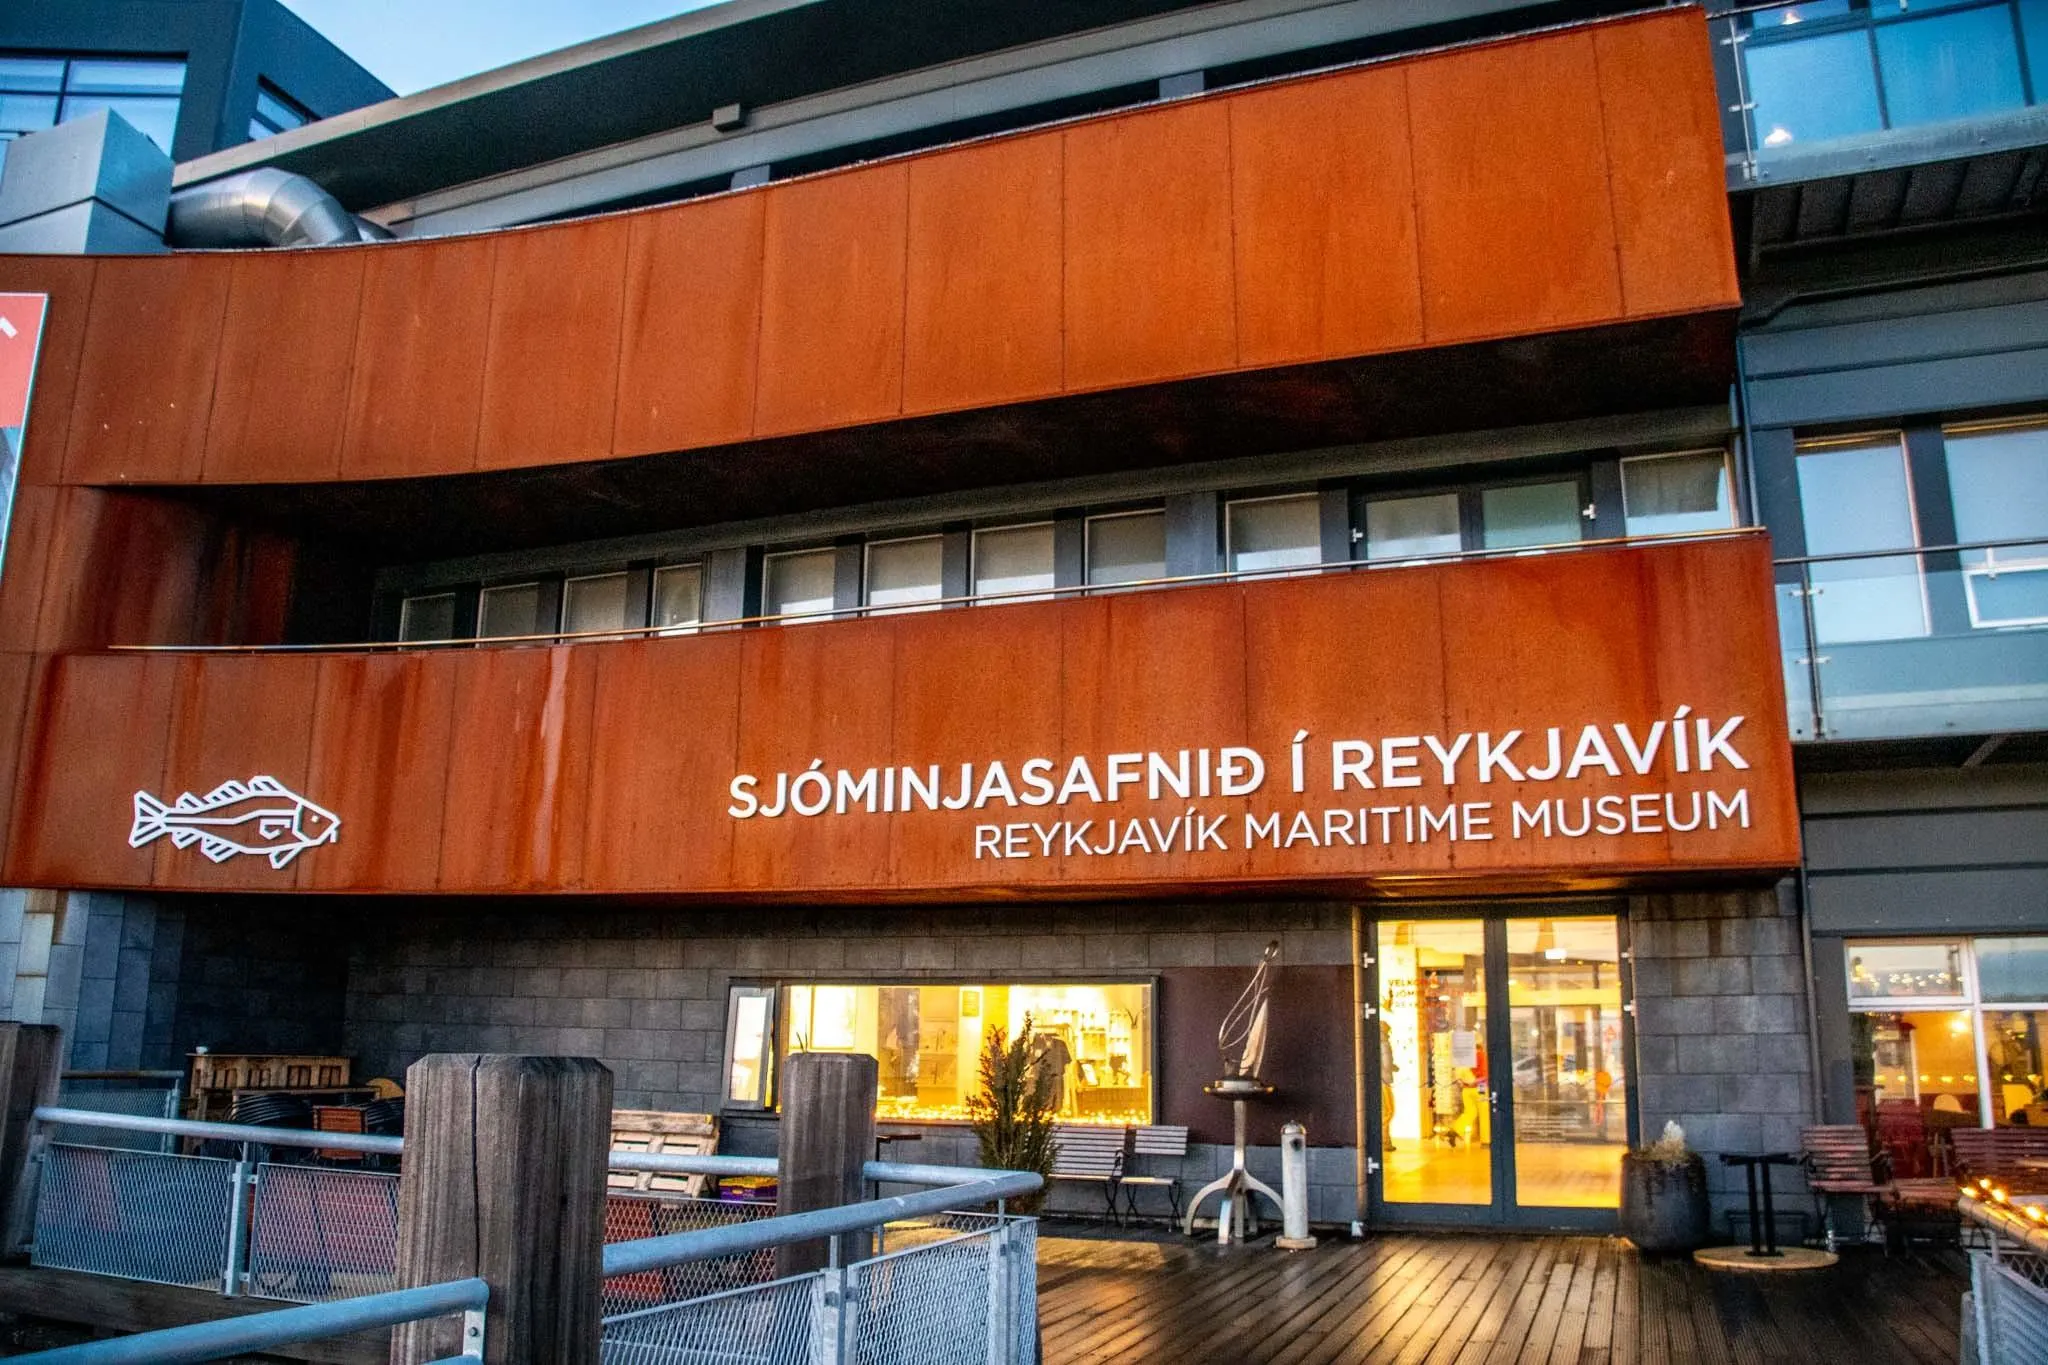 Reykjavik Maritime Museum in the harbor area